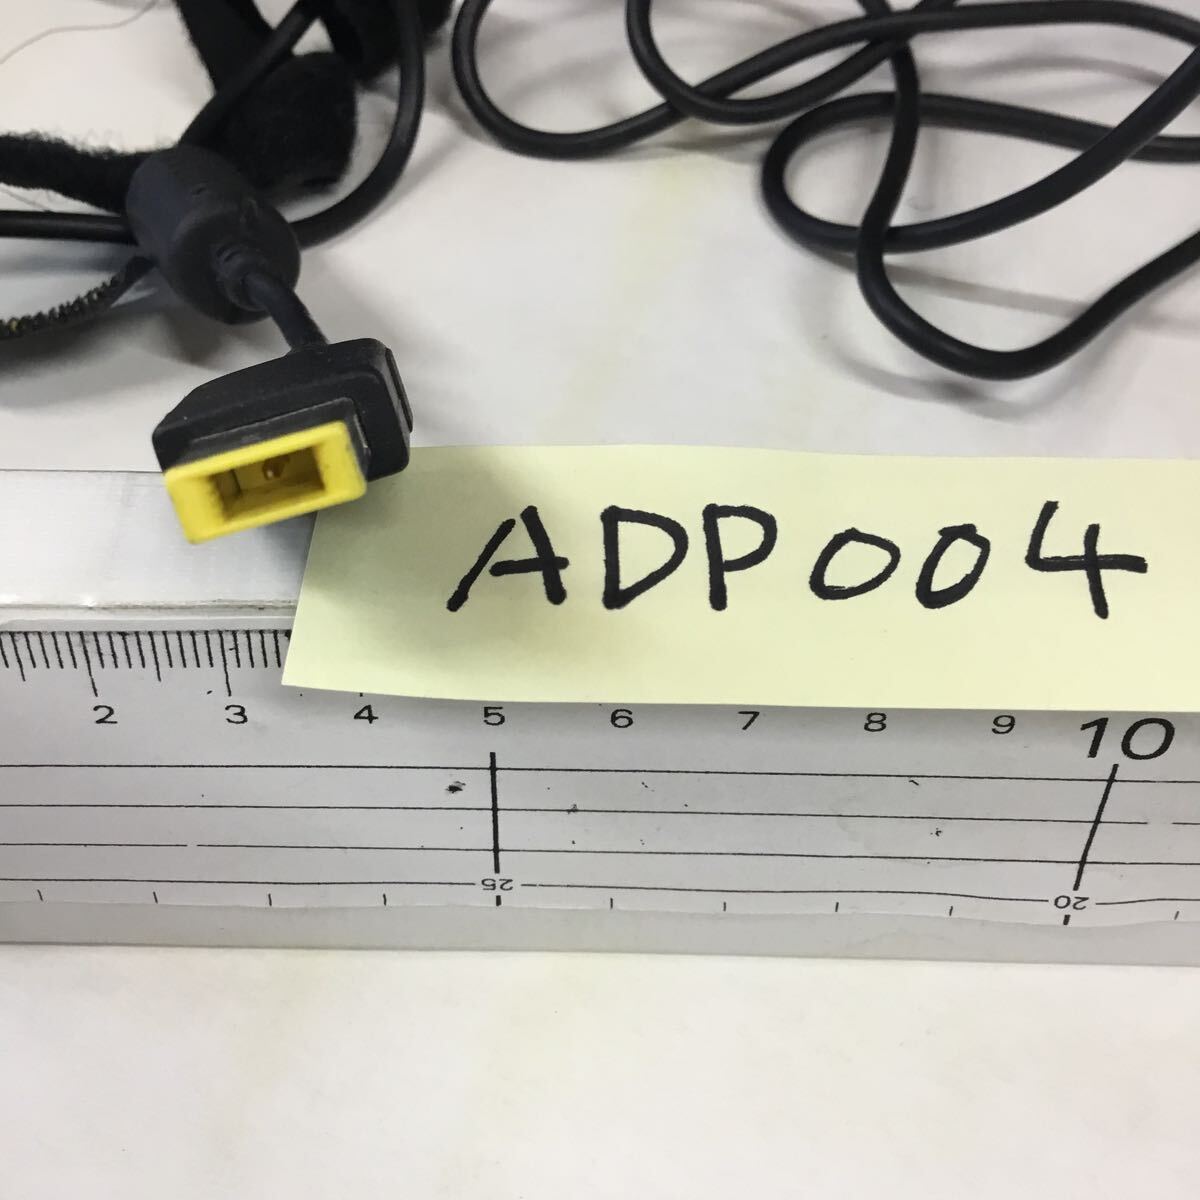 (0515SM02) free shipping / used /NEC/ADP004*ADP012/20V/3.25A/ original AC adapter 4 piece set 